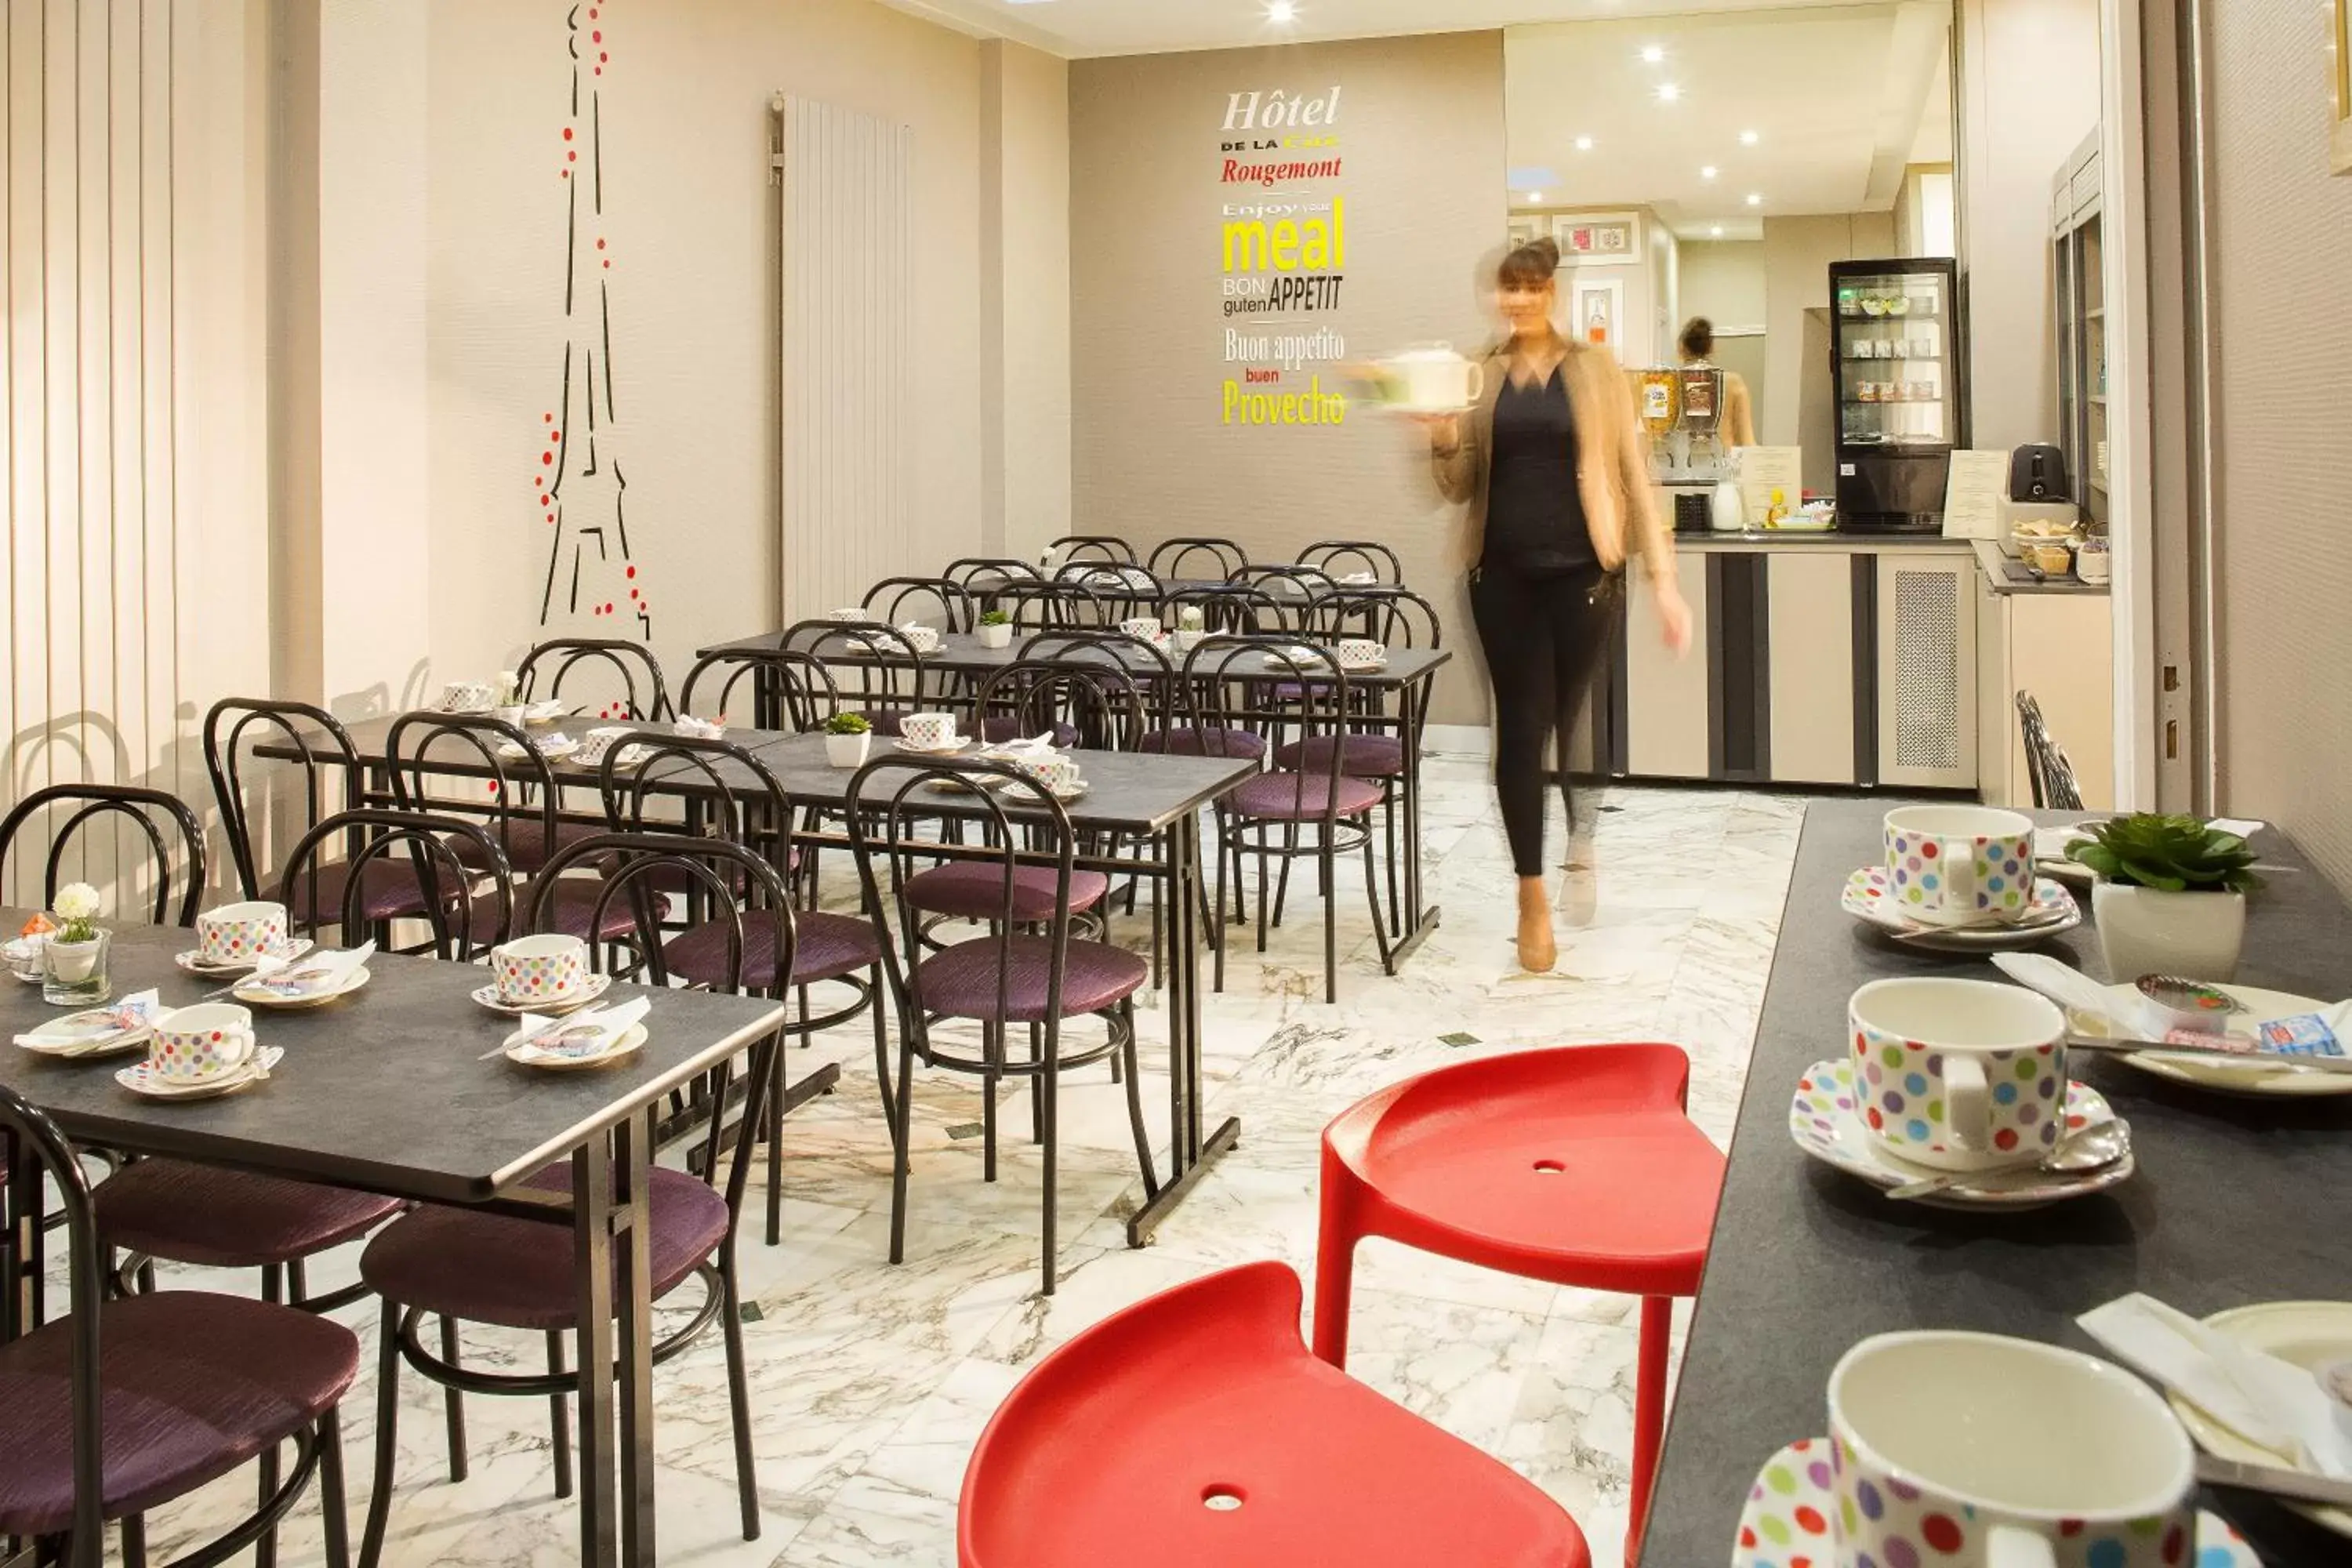 Area and facilities, Restaurant/Places to Eat in Hotel De La Cite Rougemont